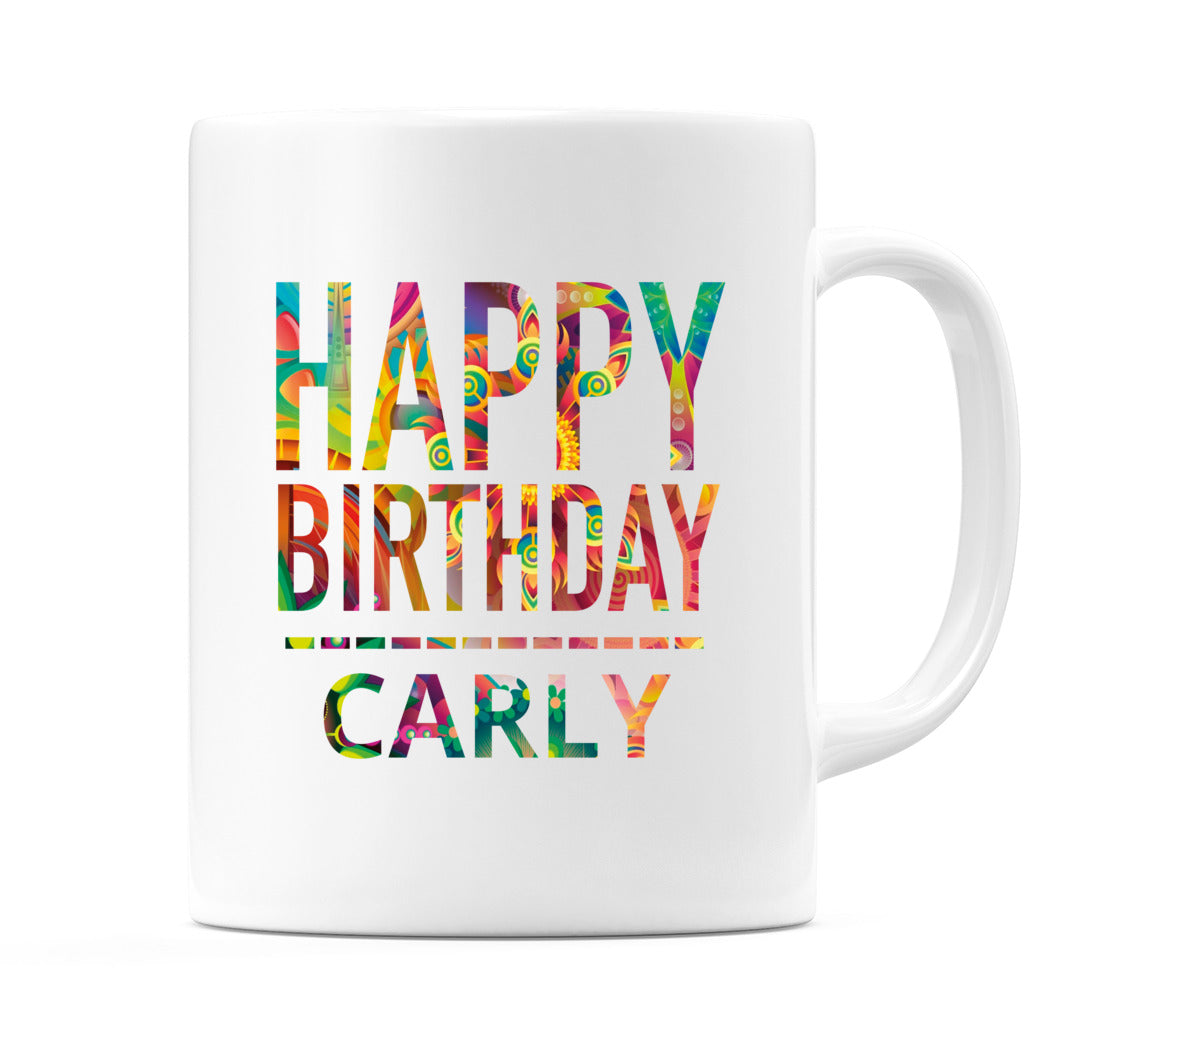 Happy Birthday Carly (Tie Dye Effect) Mug Cup by WeDoMugs